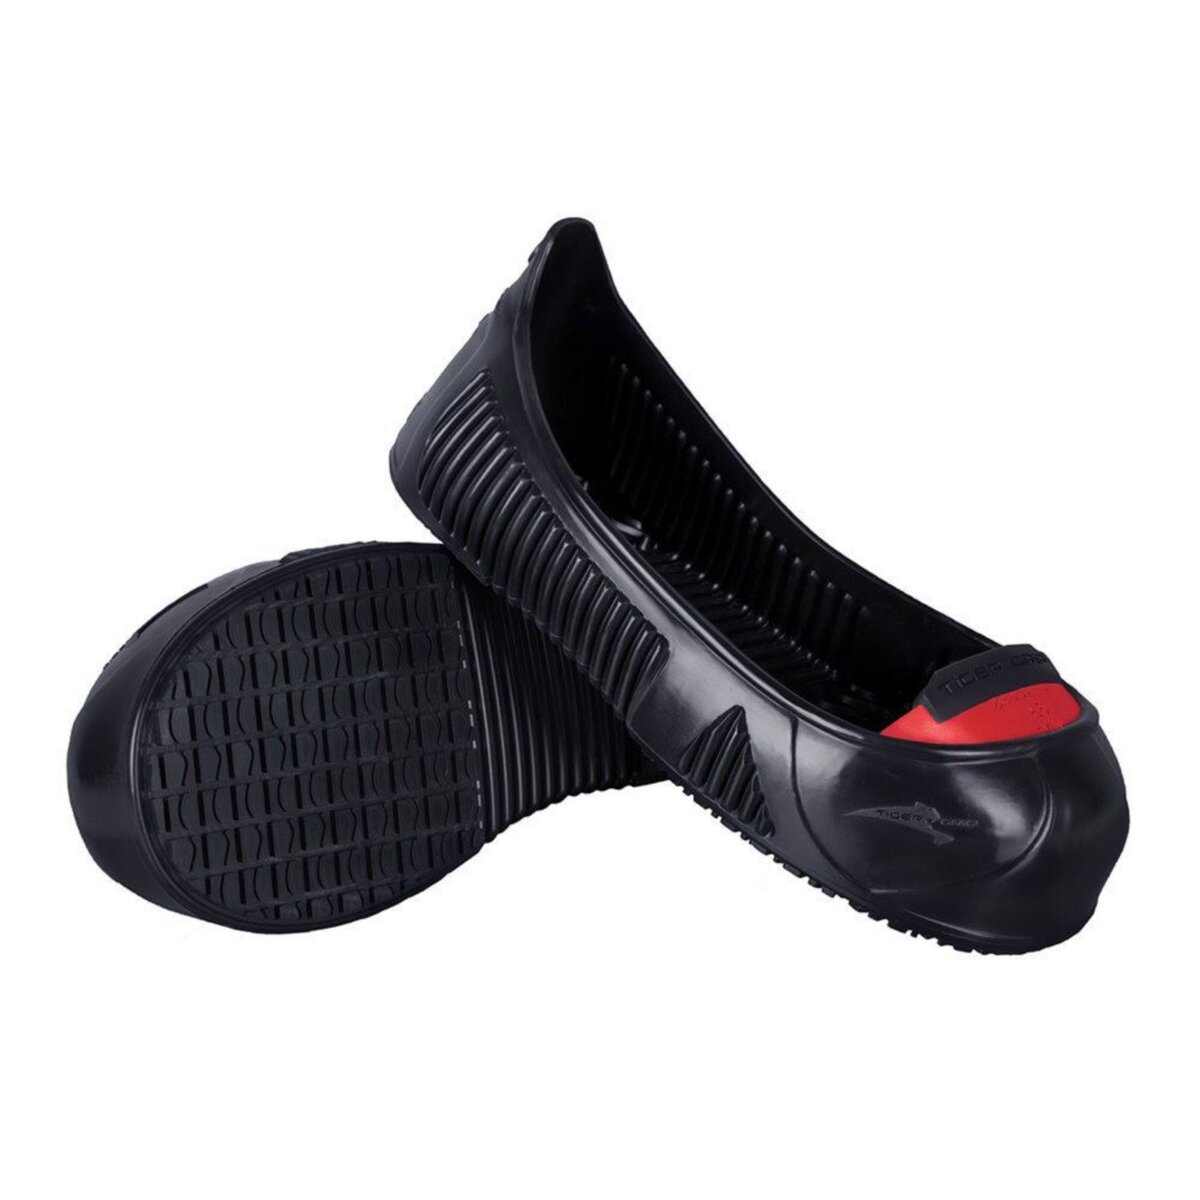 Semelles anti-glisse pour chaussures, six crampons. - Provence Outillage